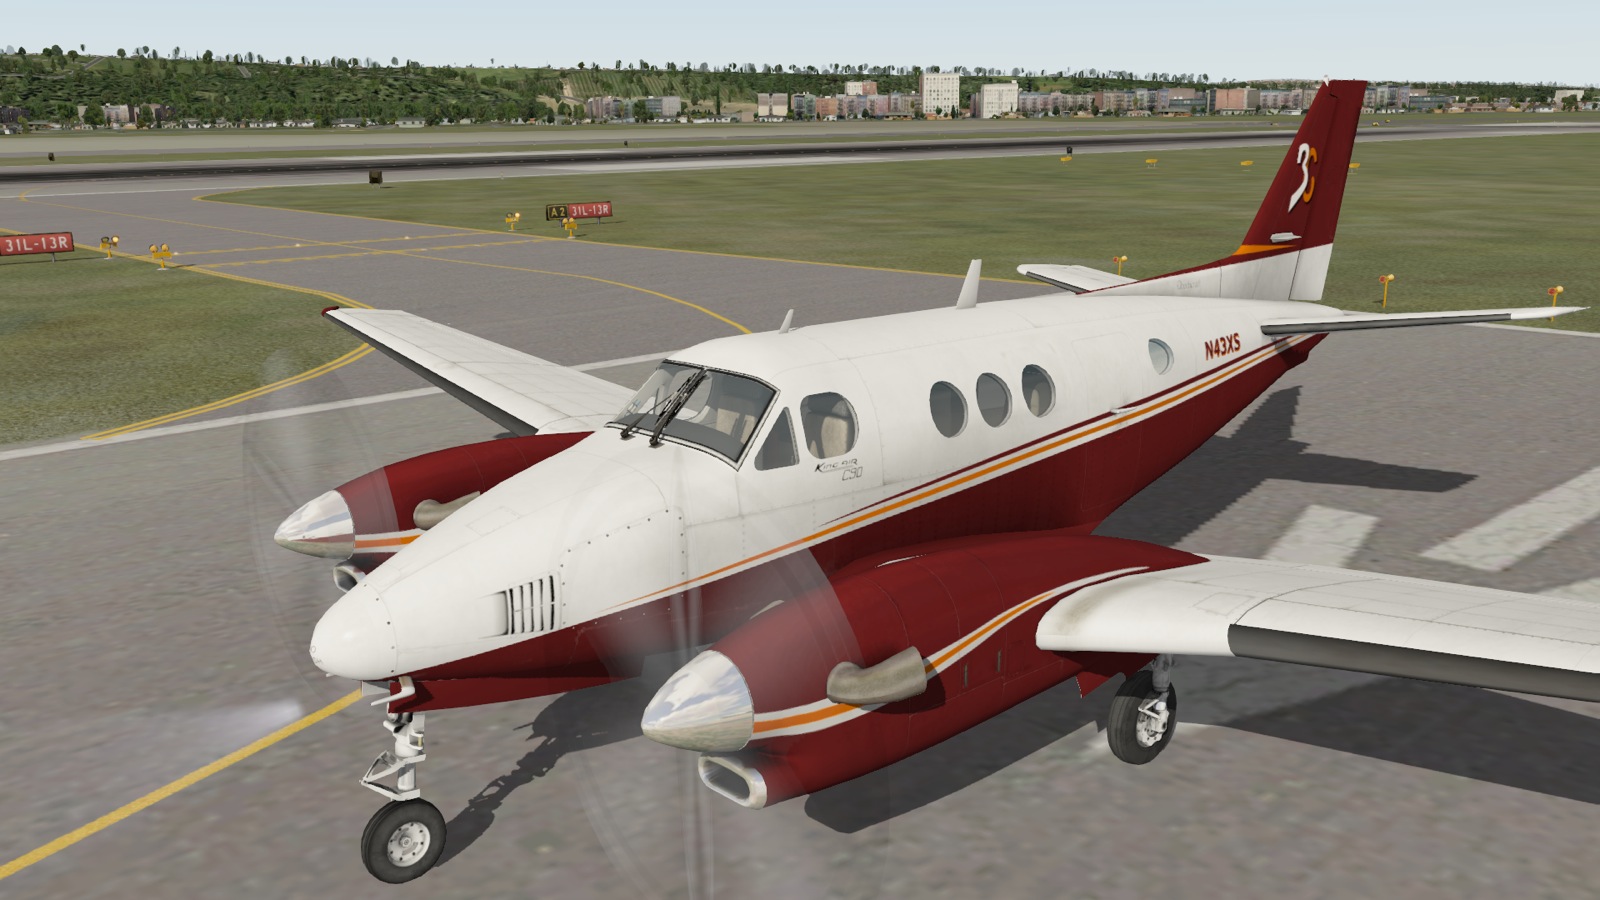 Full X-Plane screenshot